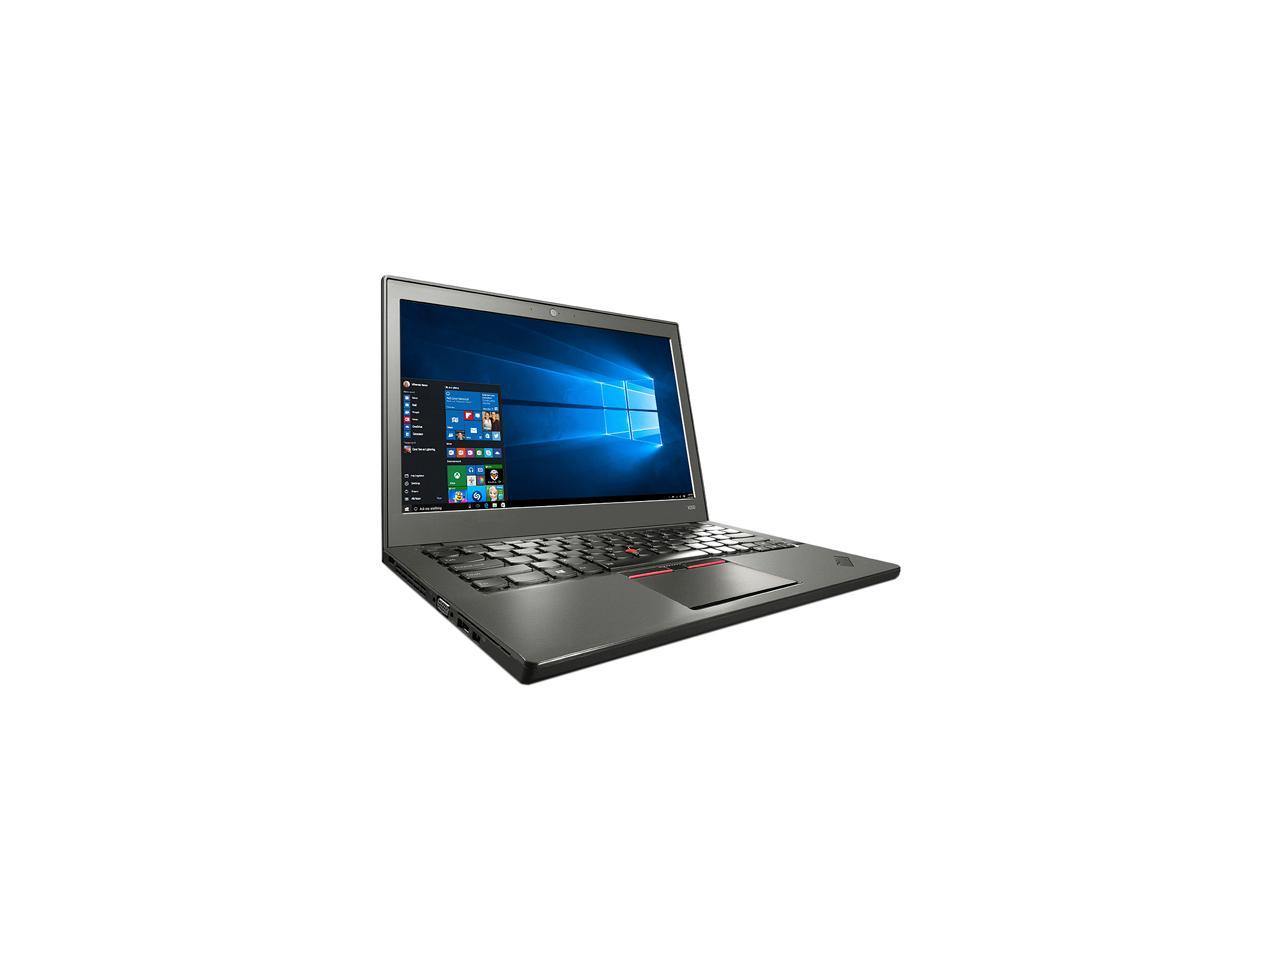 Lenovo Thinkpad X250 i5 5500u 2.2GHz 8GB Ram 256GB SSD Windows 10 Pro. Refurbrished - Atlas Computers & Electronics 